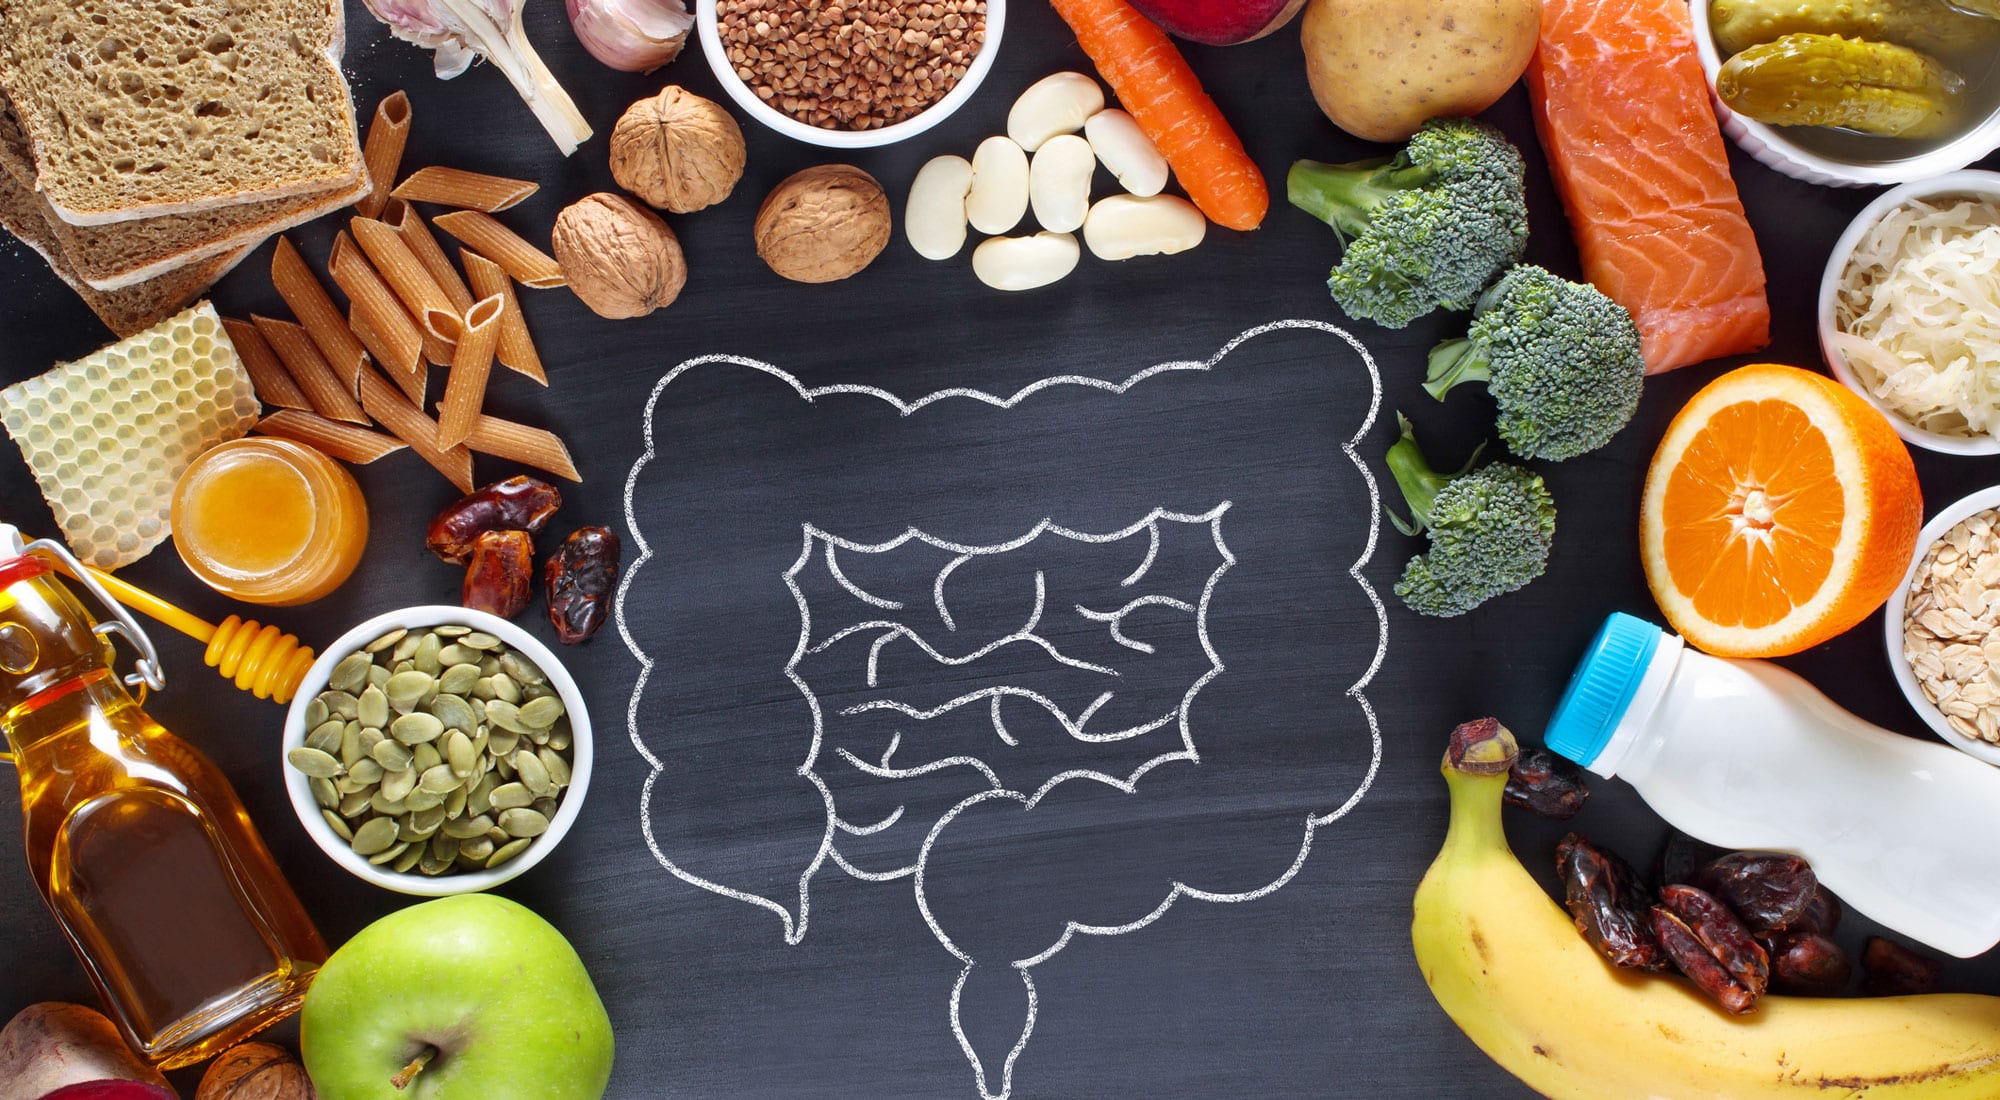 food outlining illustration of intestinal system